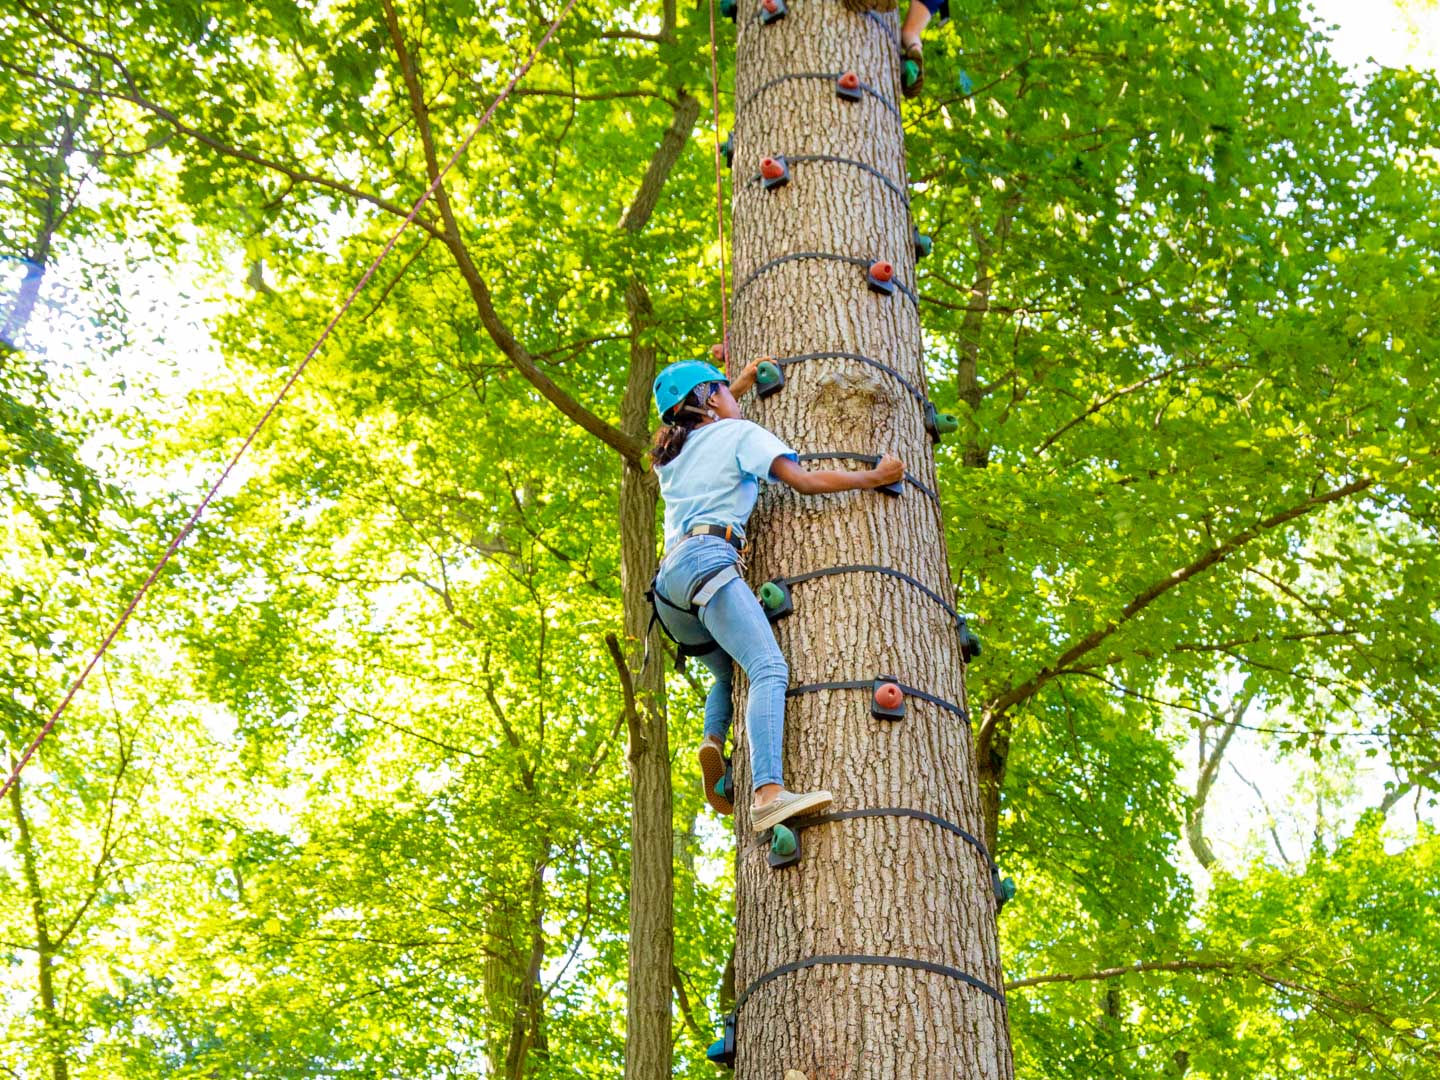 Camper climbing the climbing tree